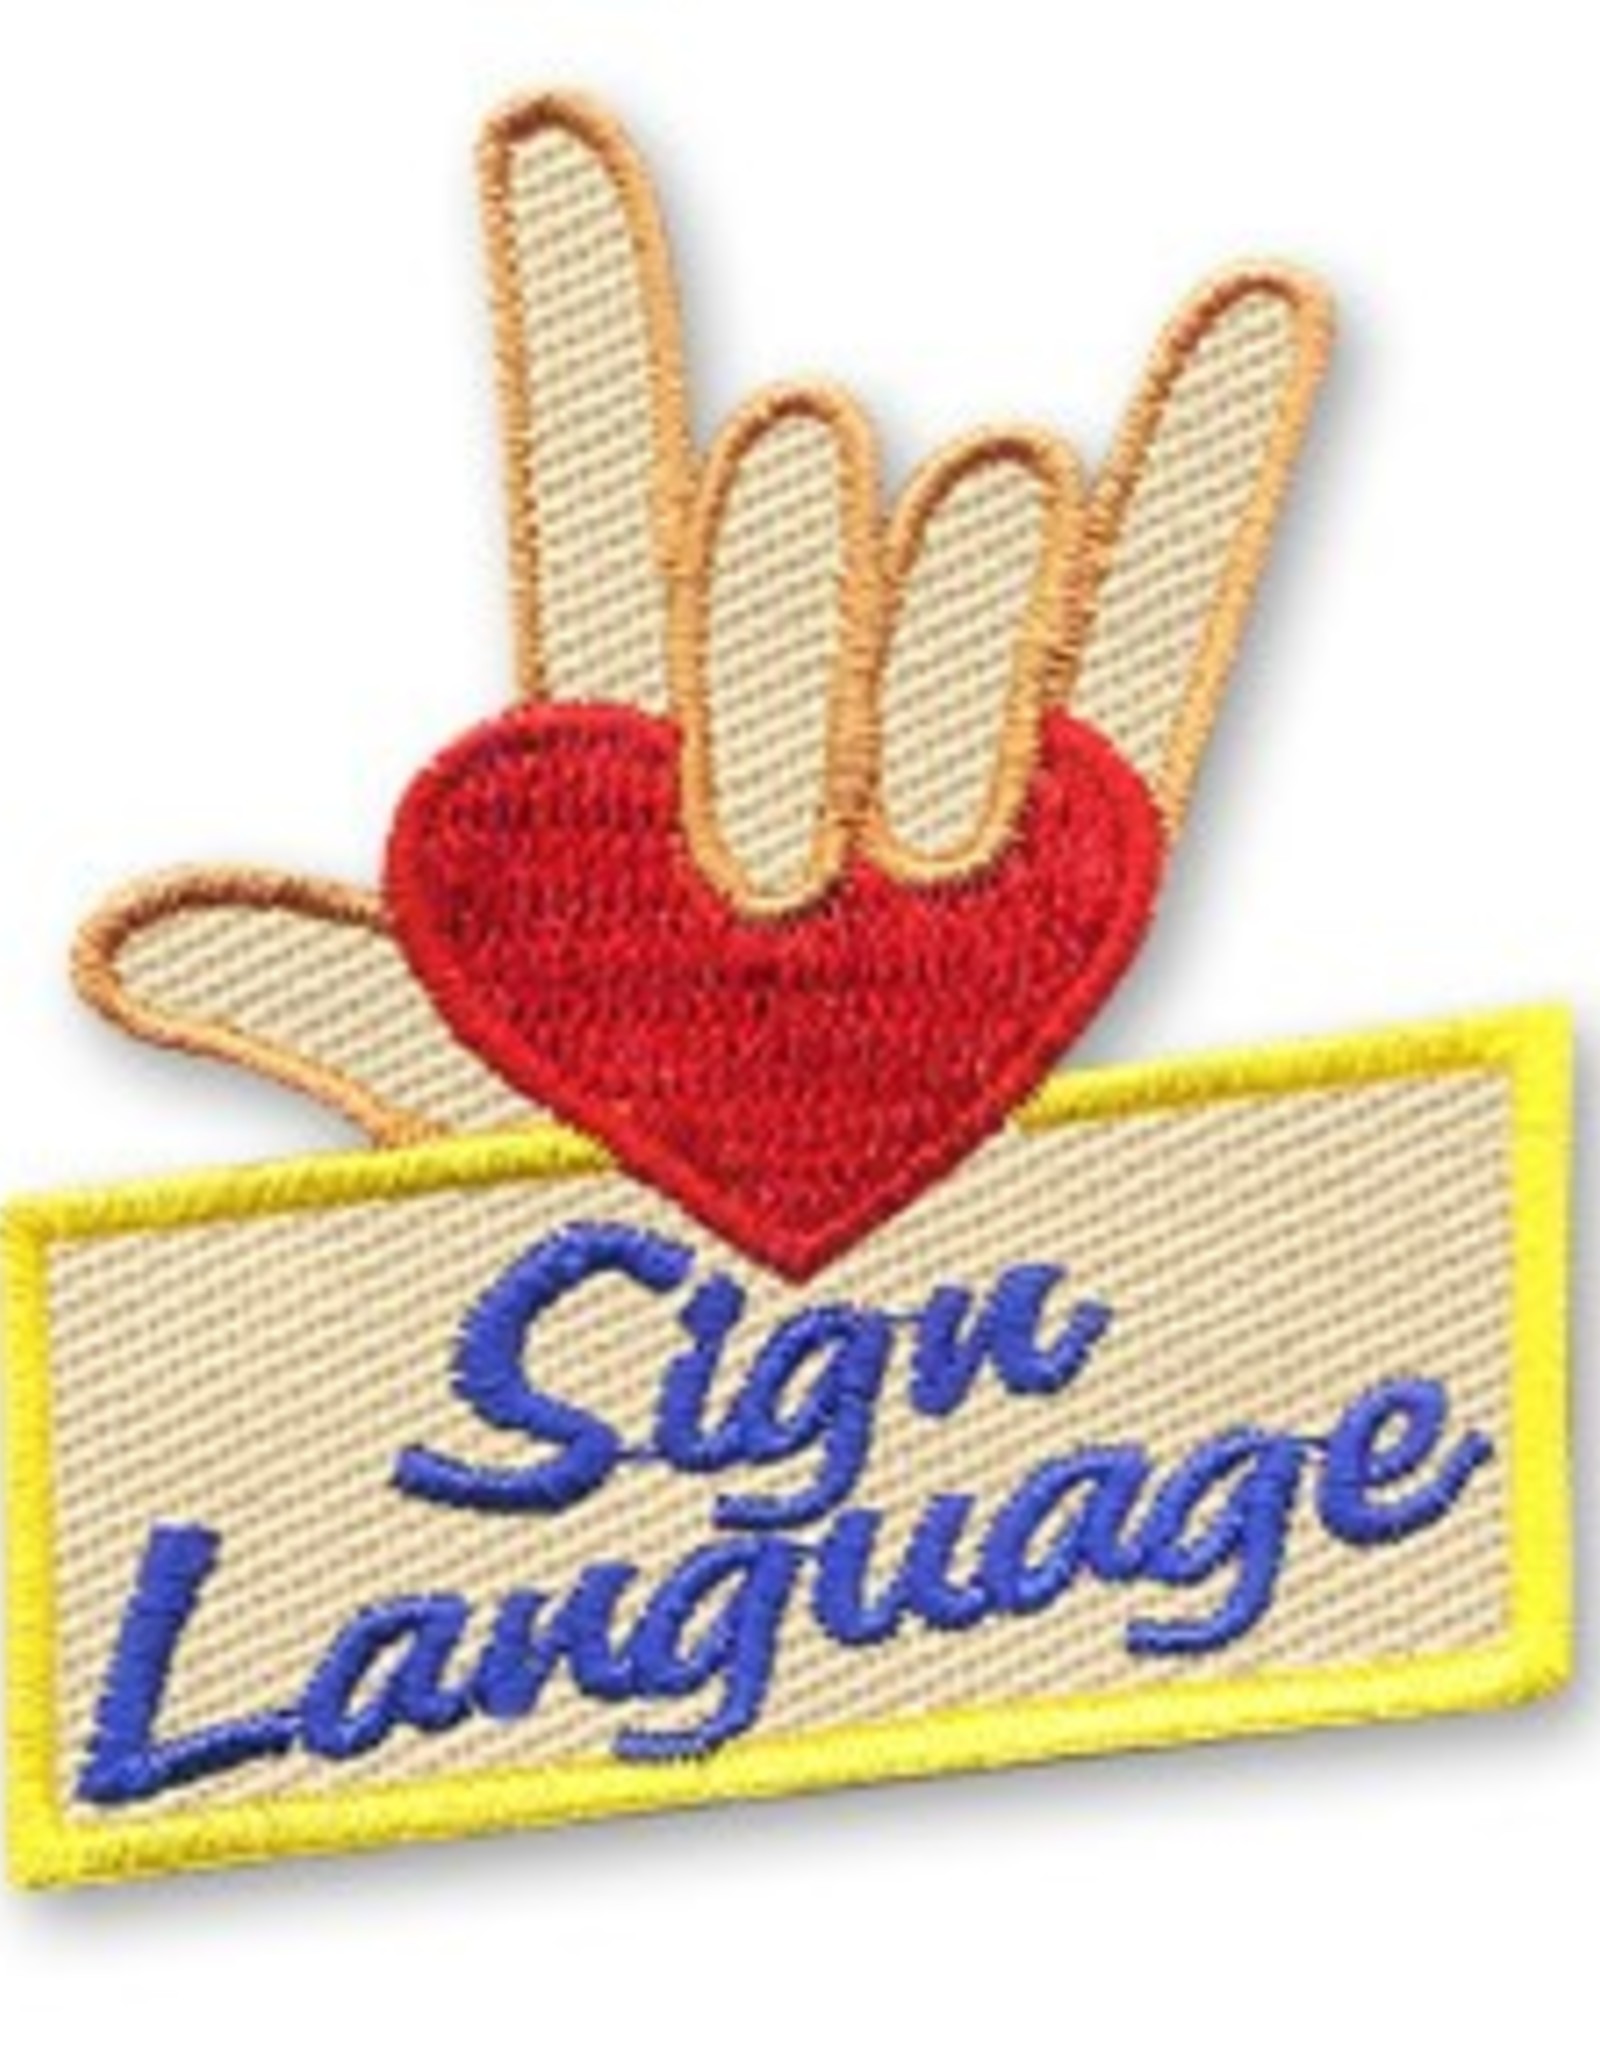 snappylogos Sign Language Fun Patch (3777)